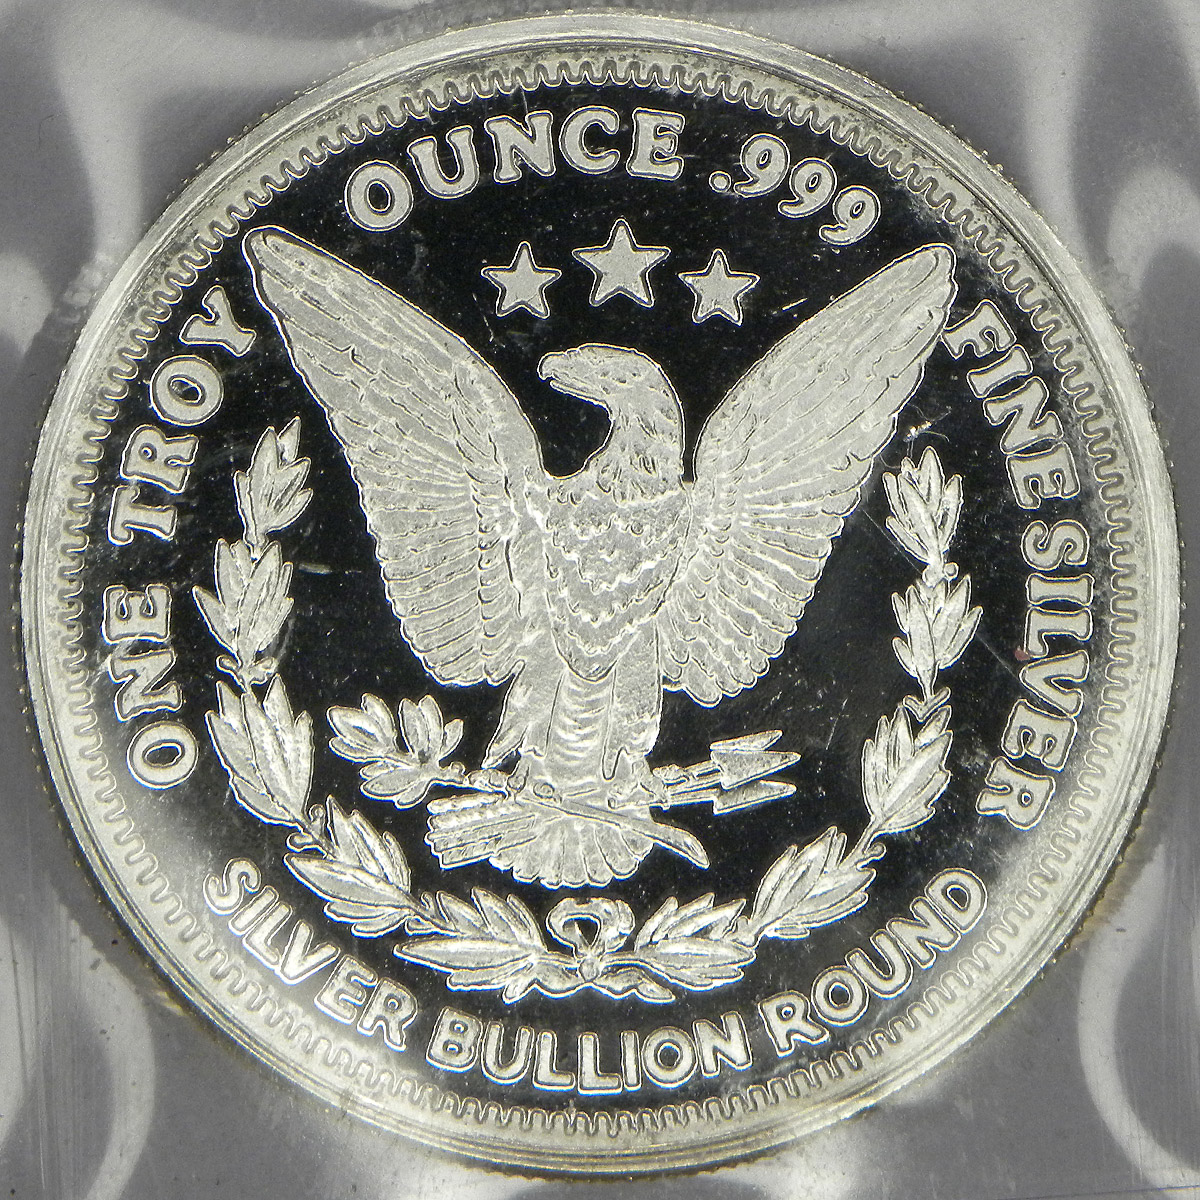 Silver Round with Morgan Dollar design (reverse)